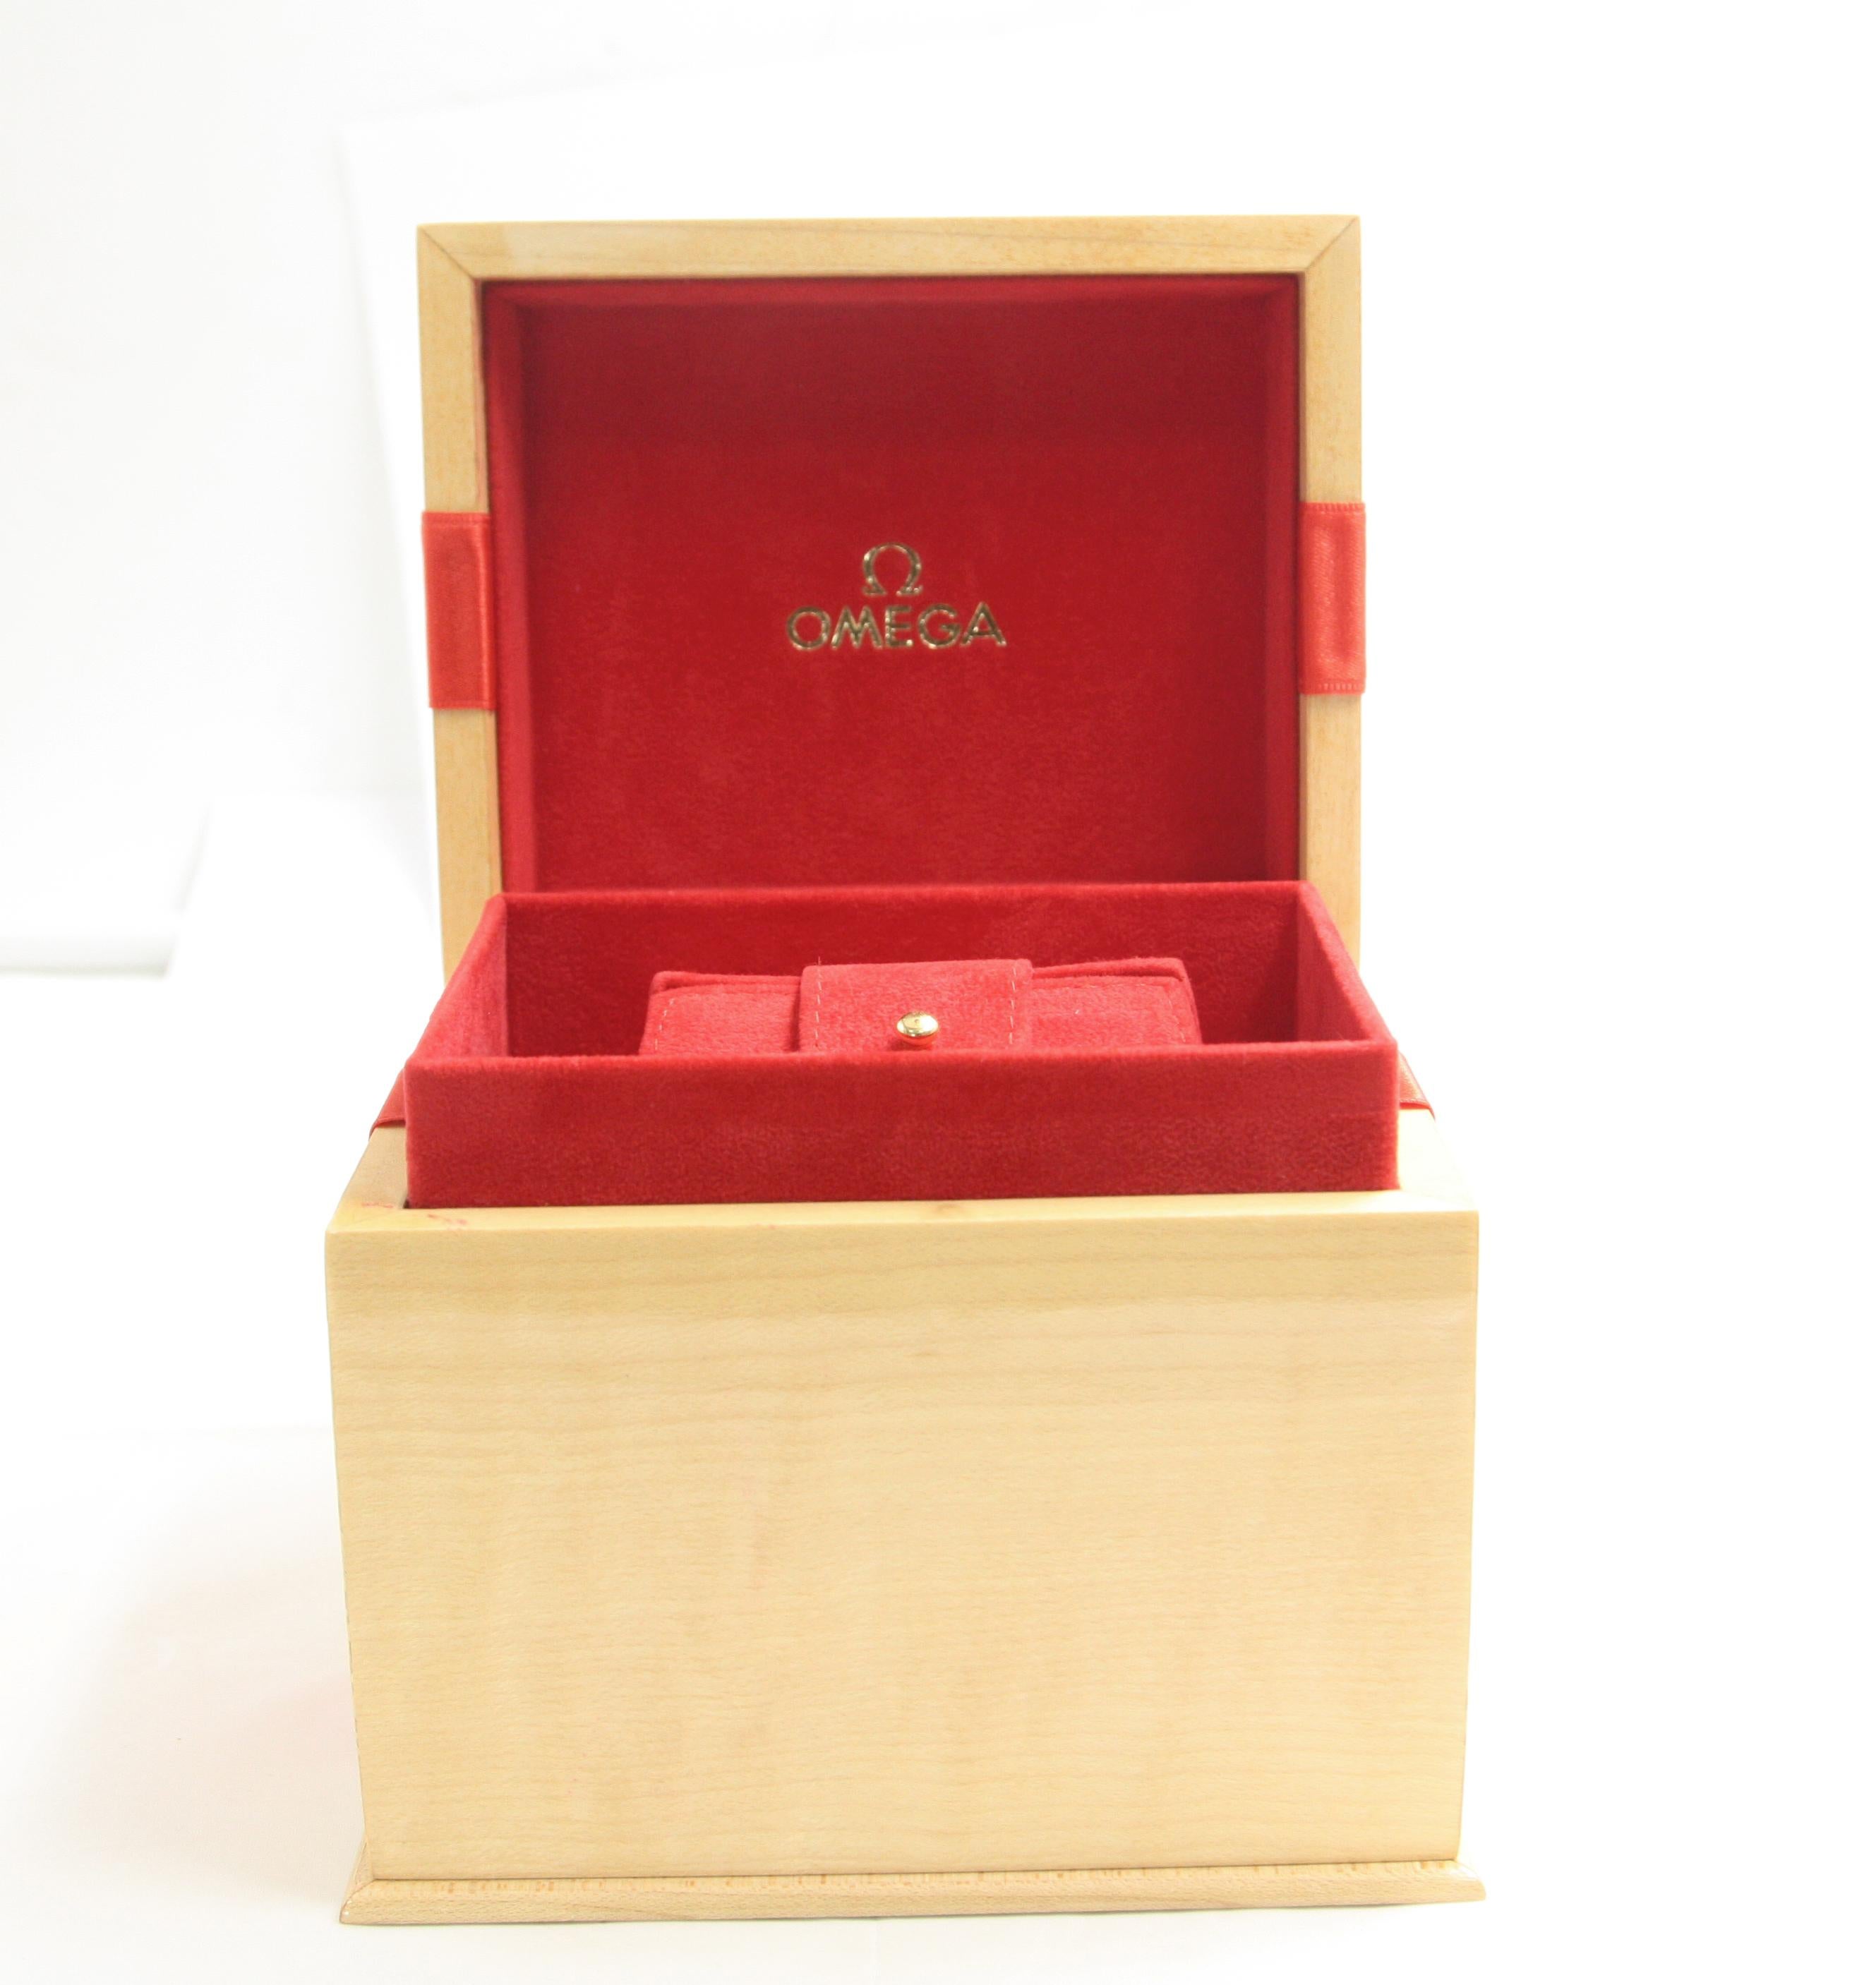 Omega Watch box
12cm*12cm